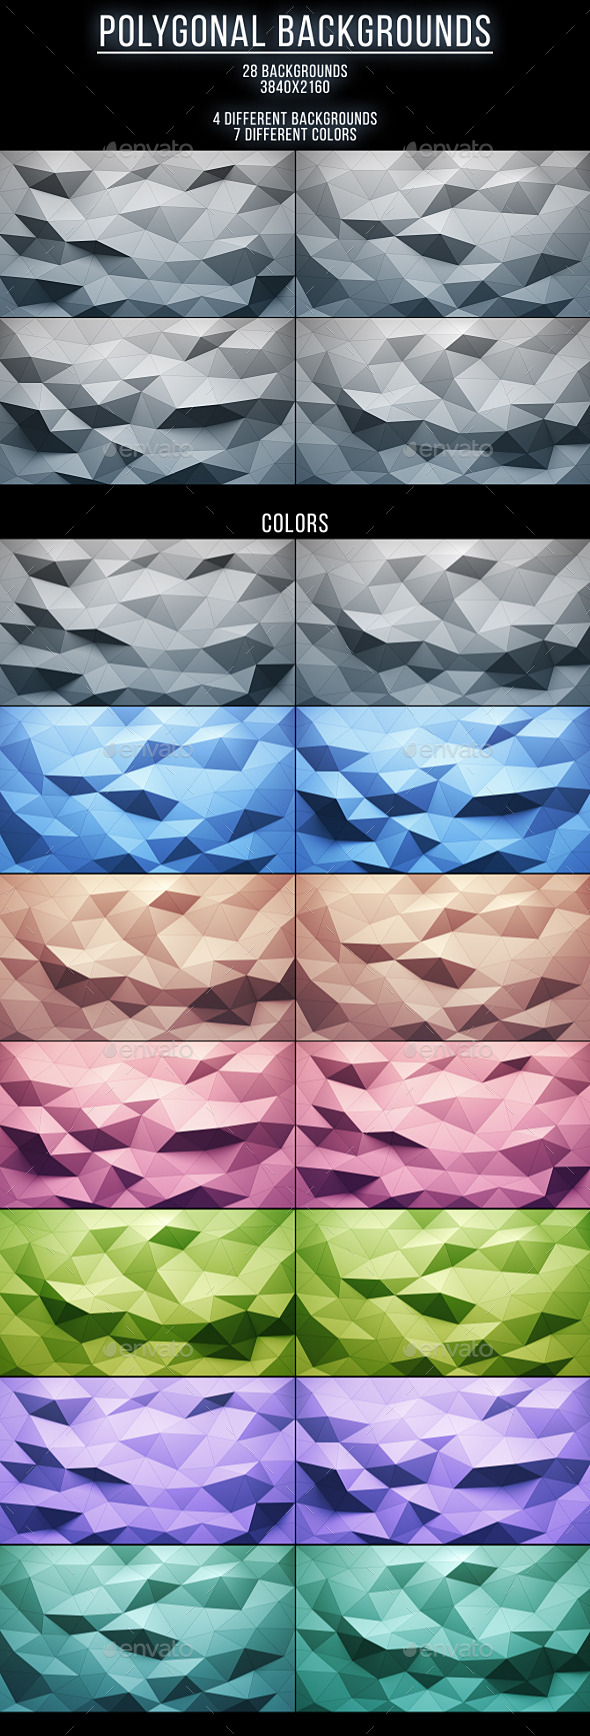 28 Polygonal Backgrounds